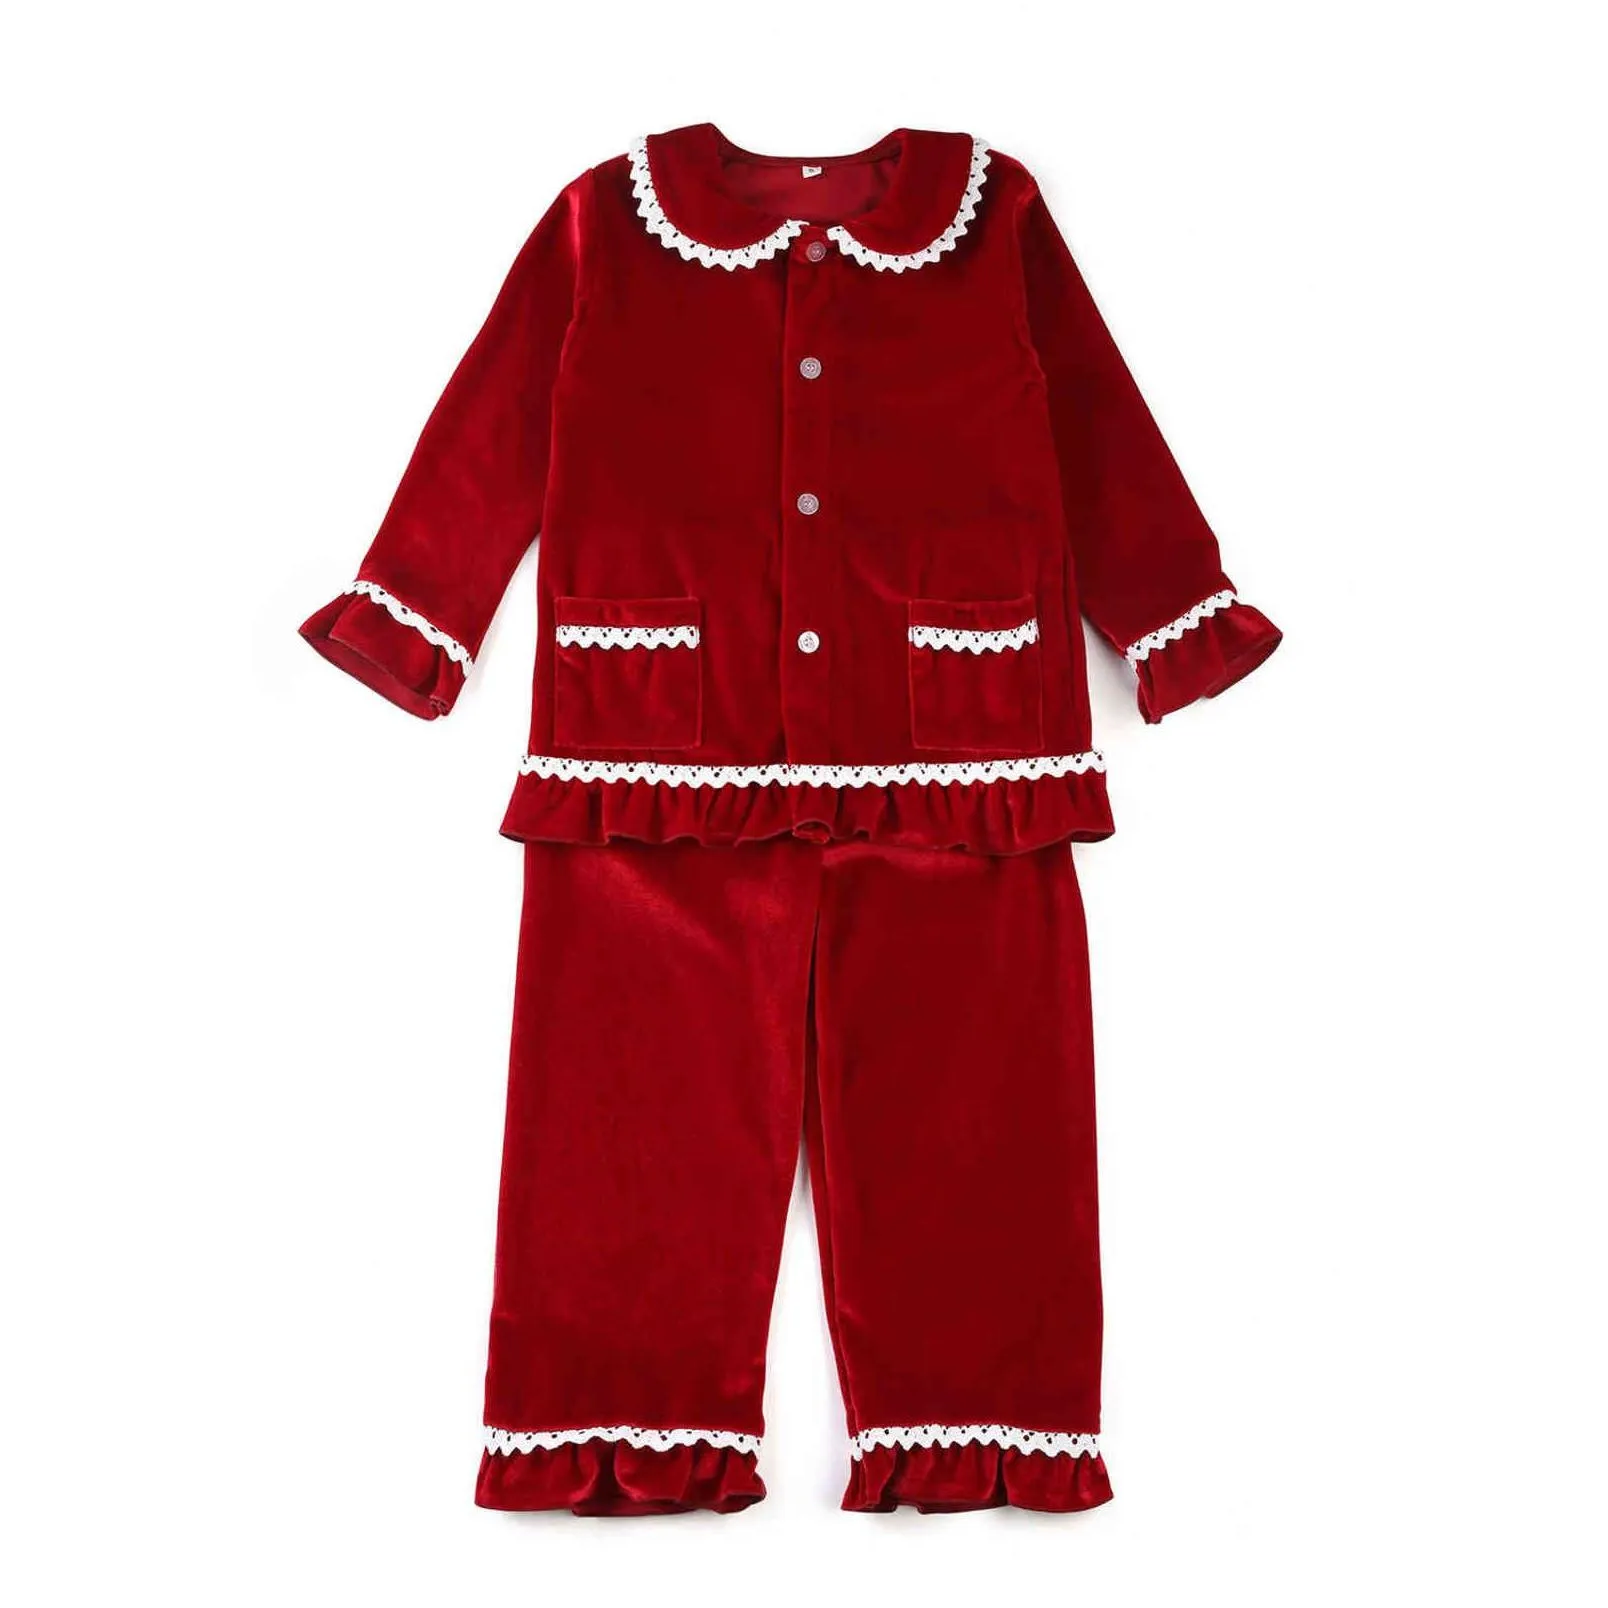 xmas pjs red velvet button up christmas pyjamas kids sleepwear matching pj girls pijama sets 211109